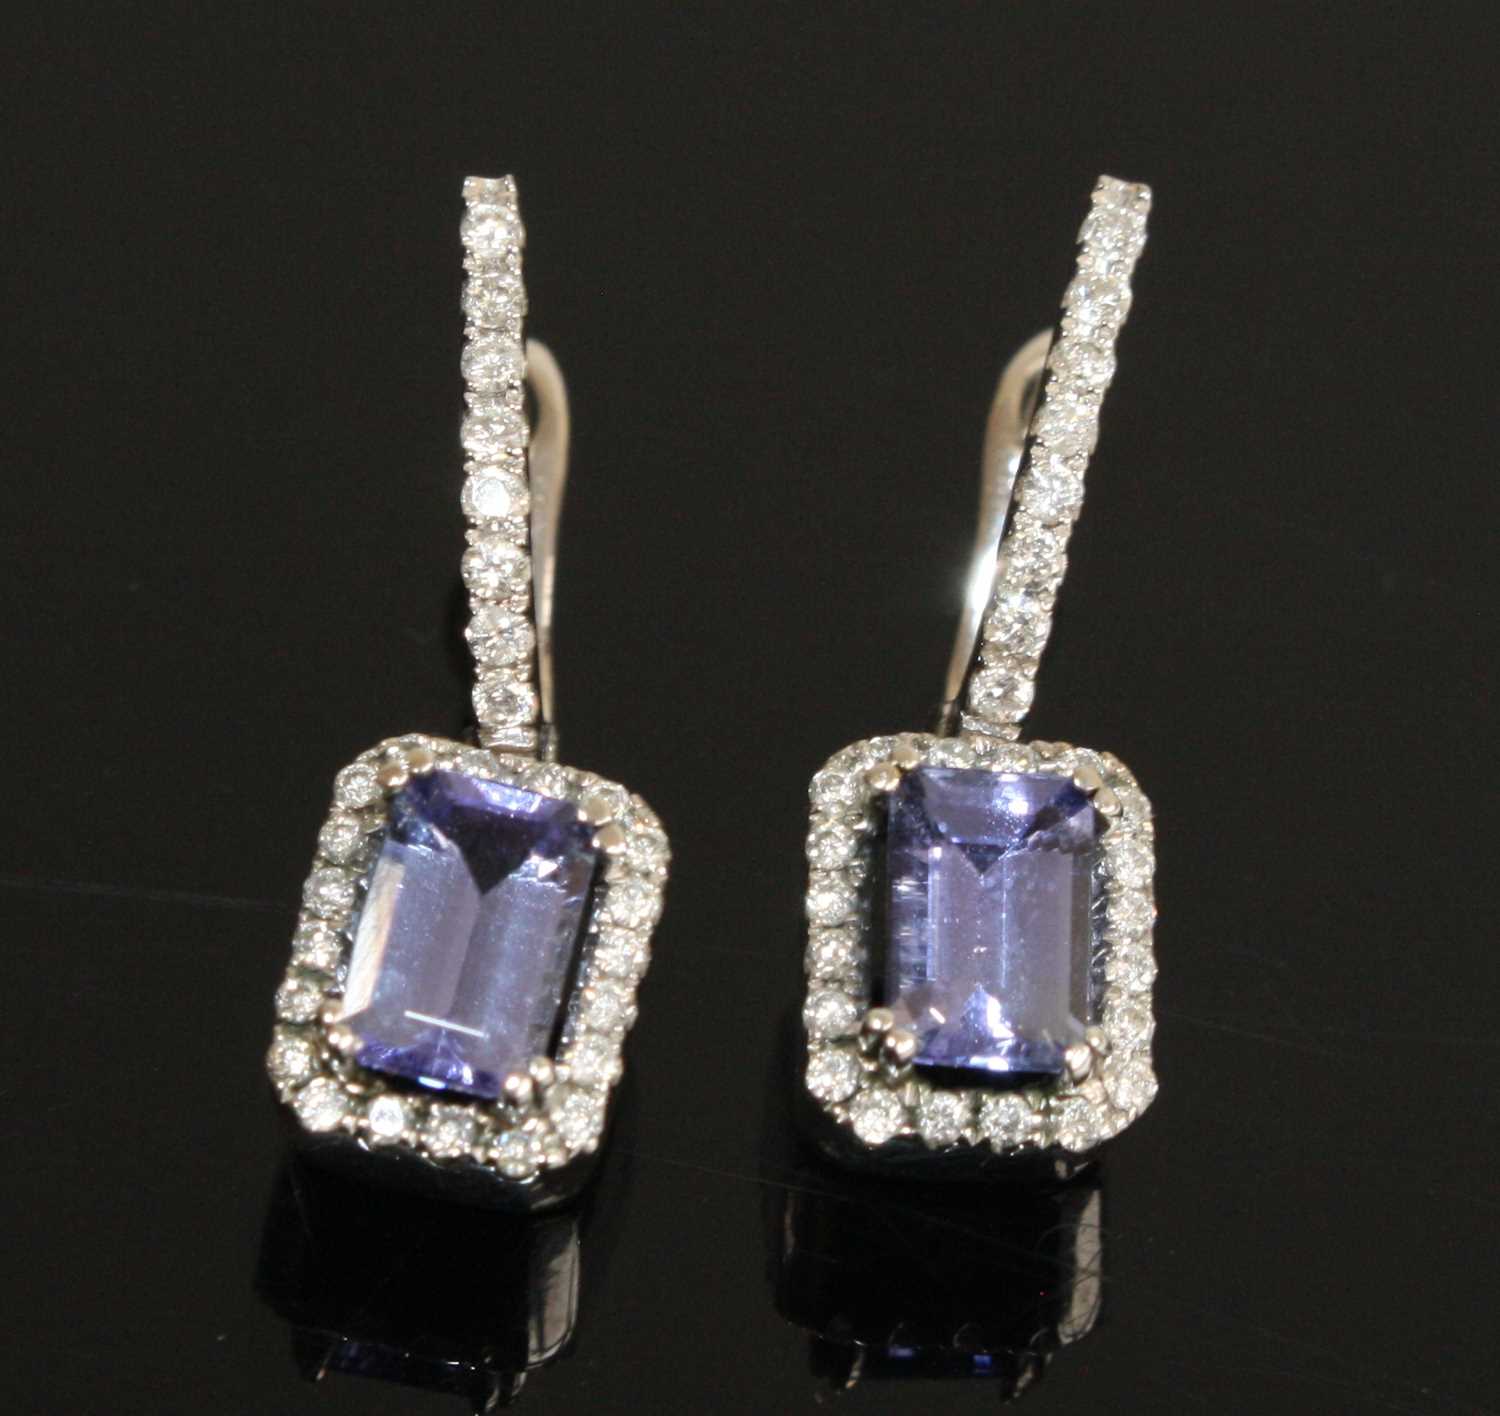 A pair of white metal, tanzanite and diamond drop earrings, each featuring a rectangular cut